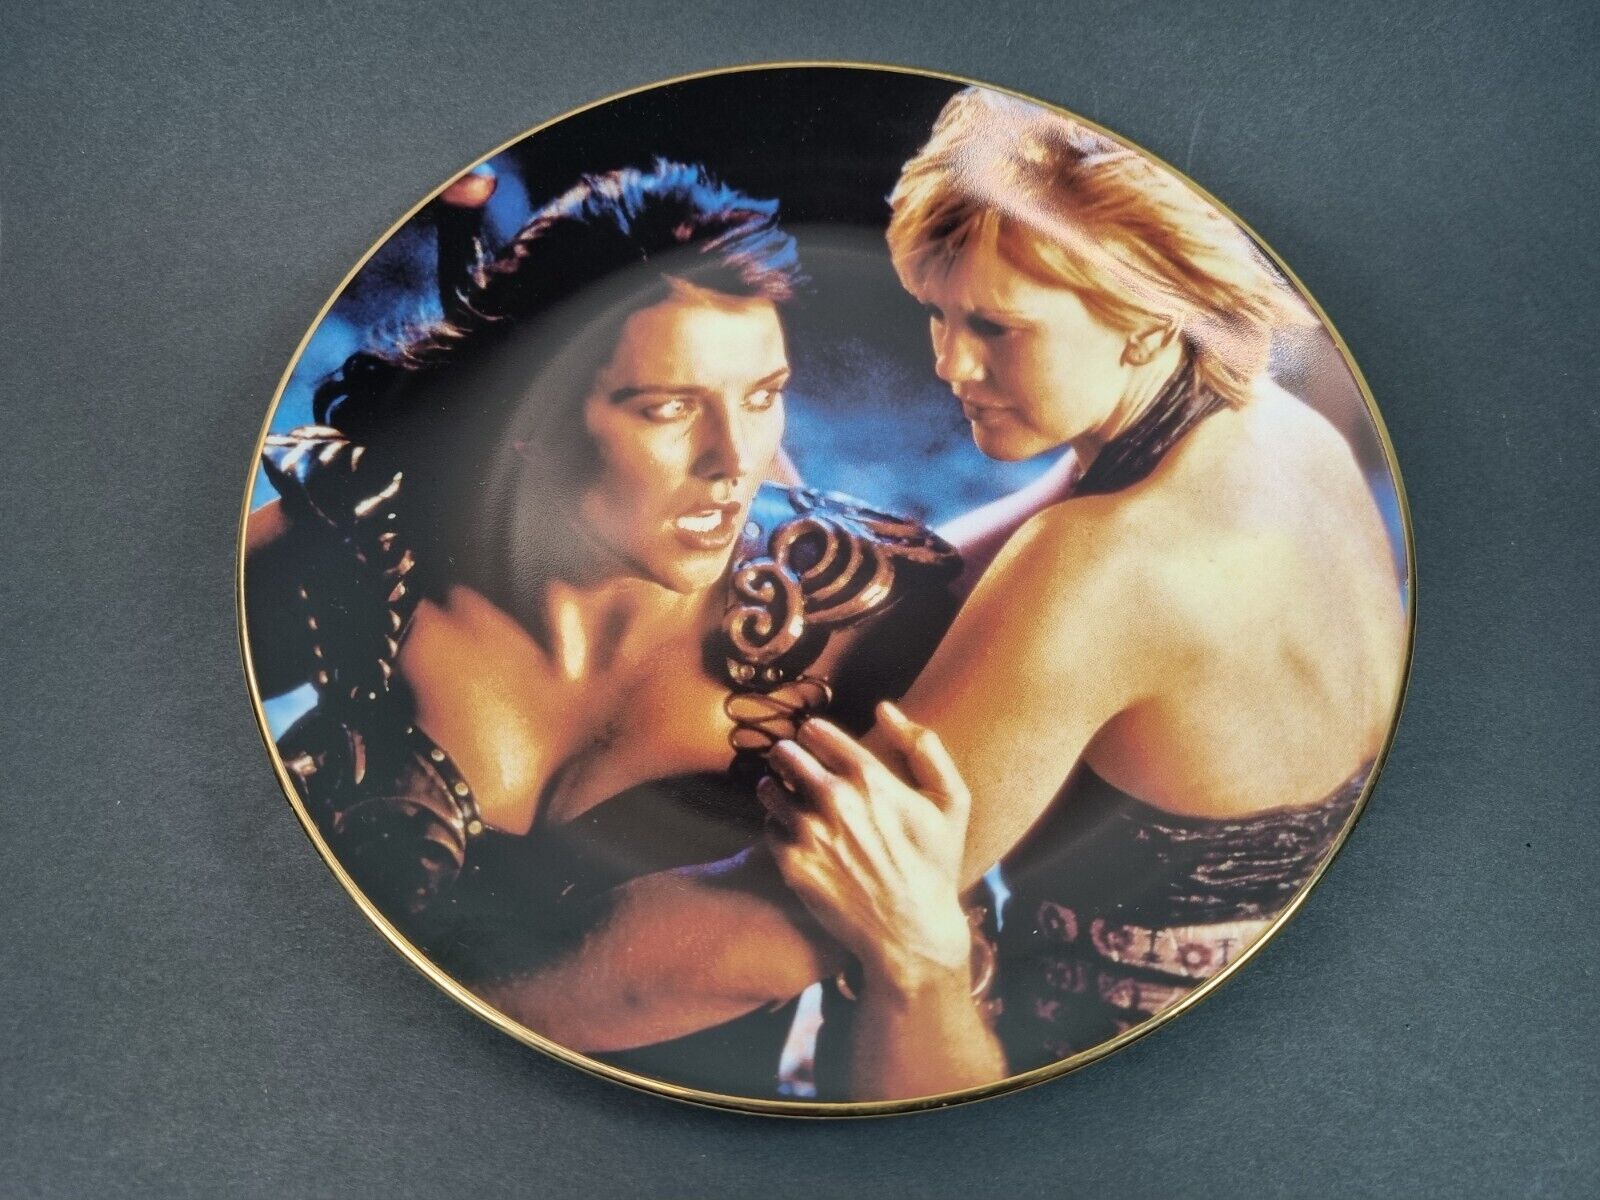 Xena warrior princess. VTG collector's plate. Xena and Gabriel. #557-1000.